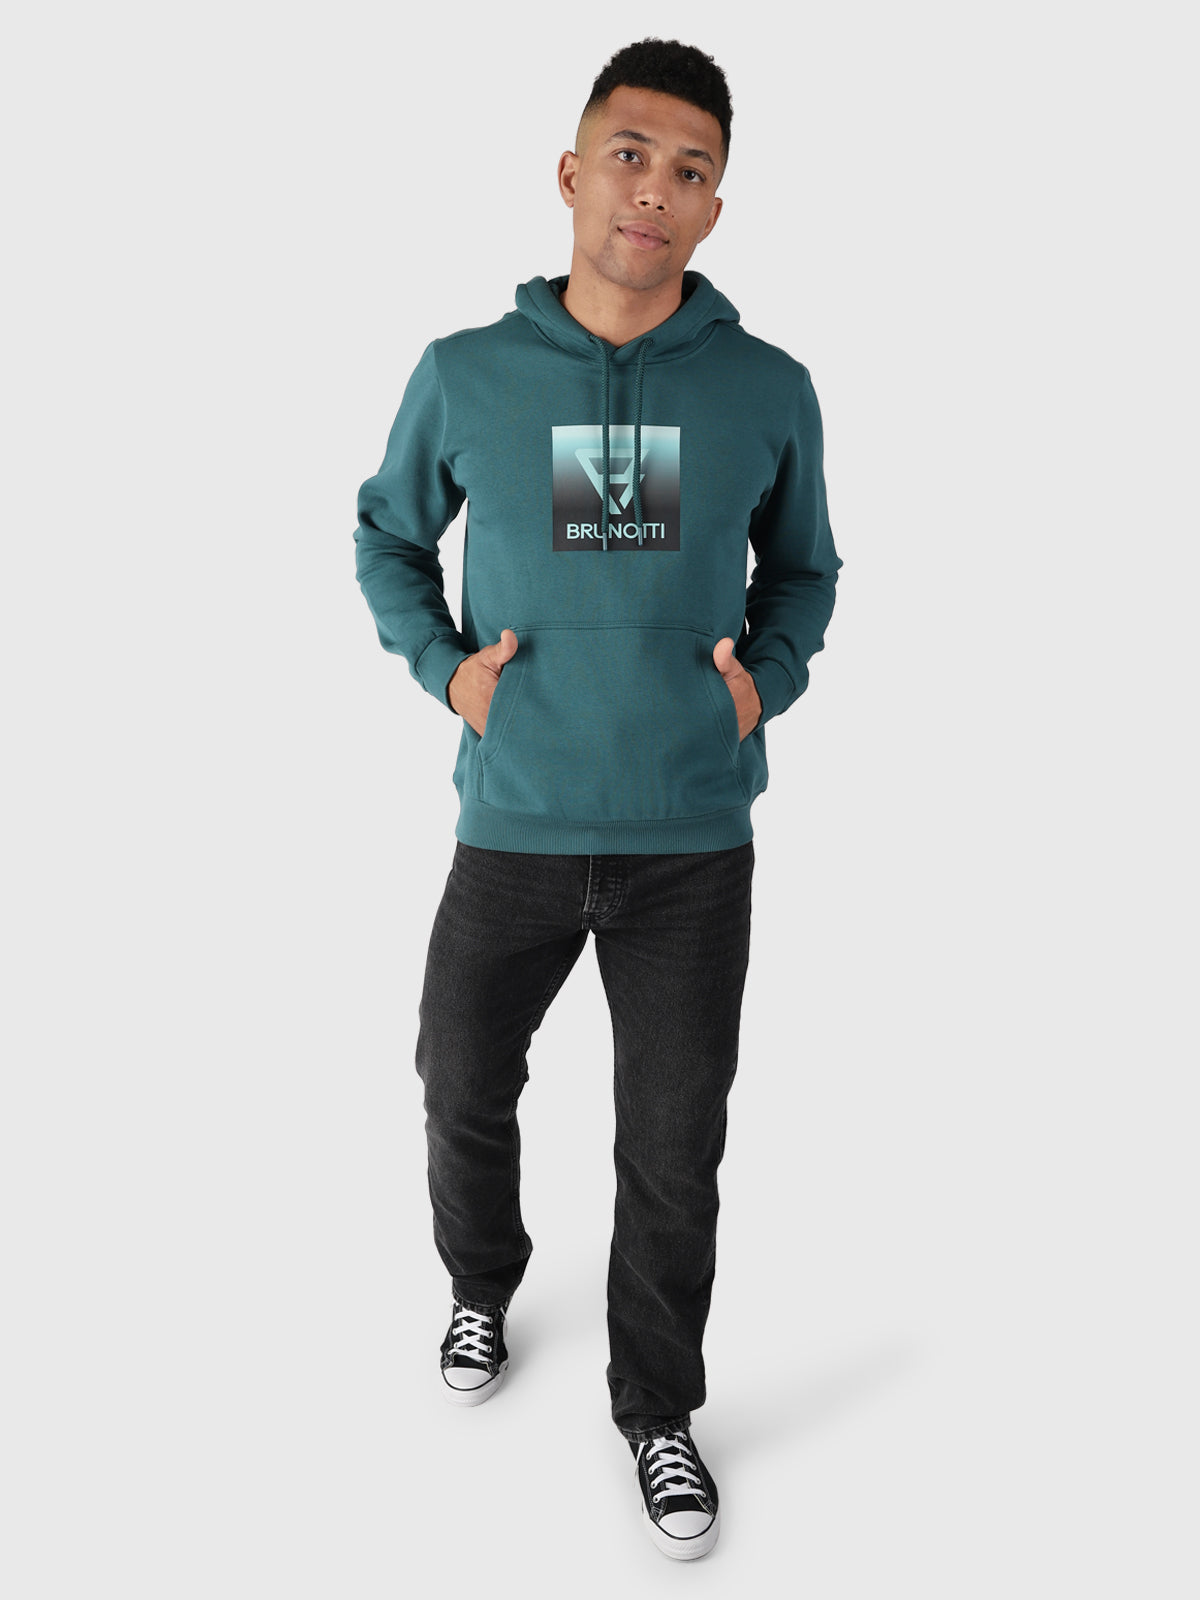 Vincer-R Herren Sweatshirt | Grün